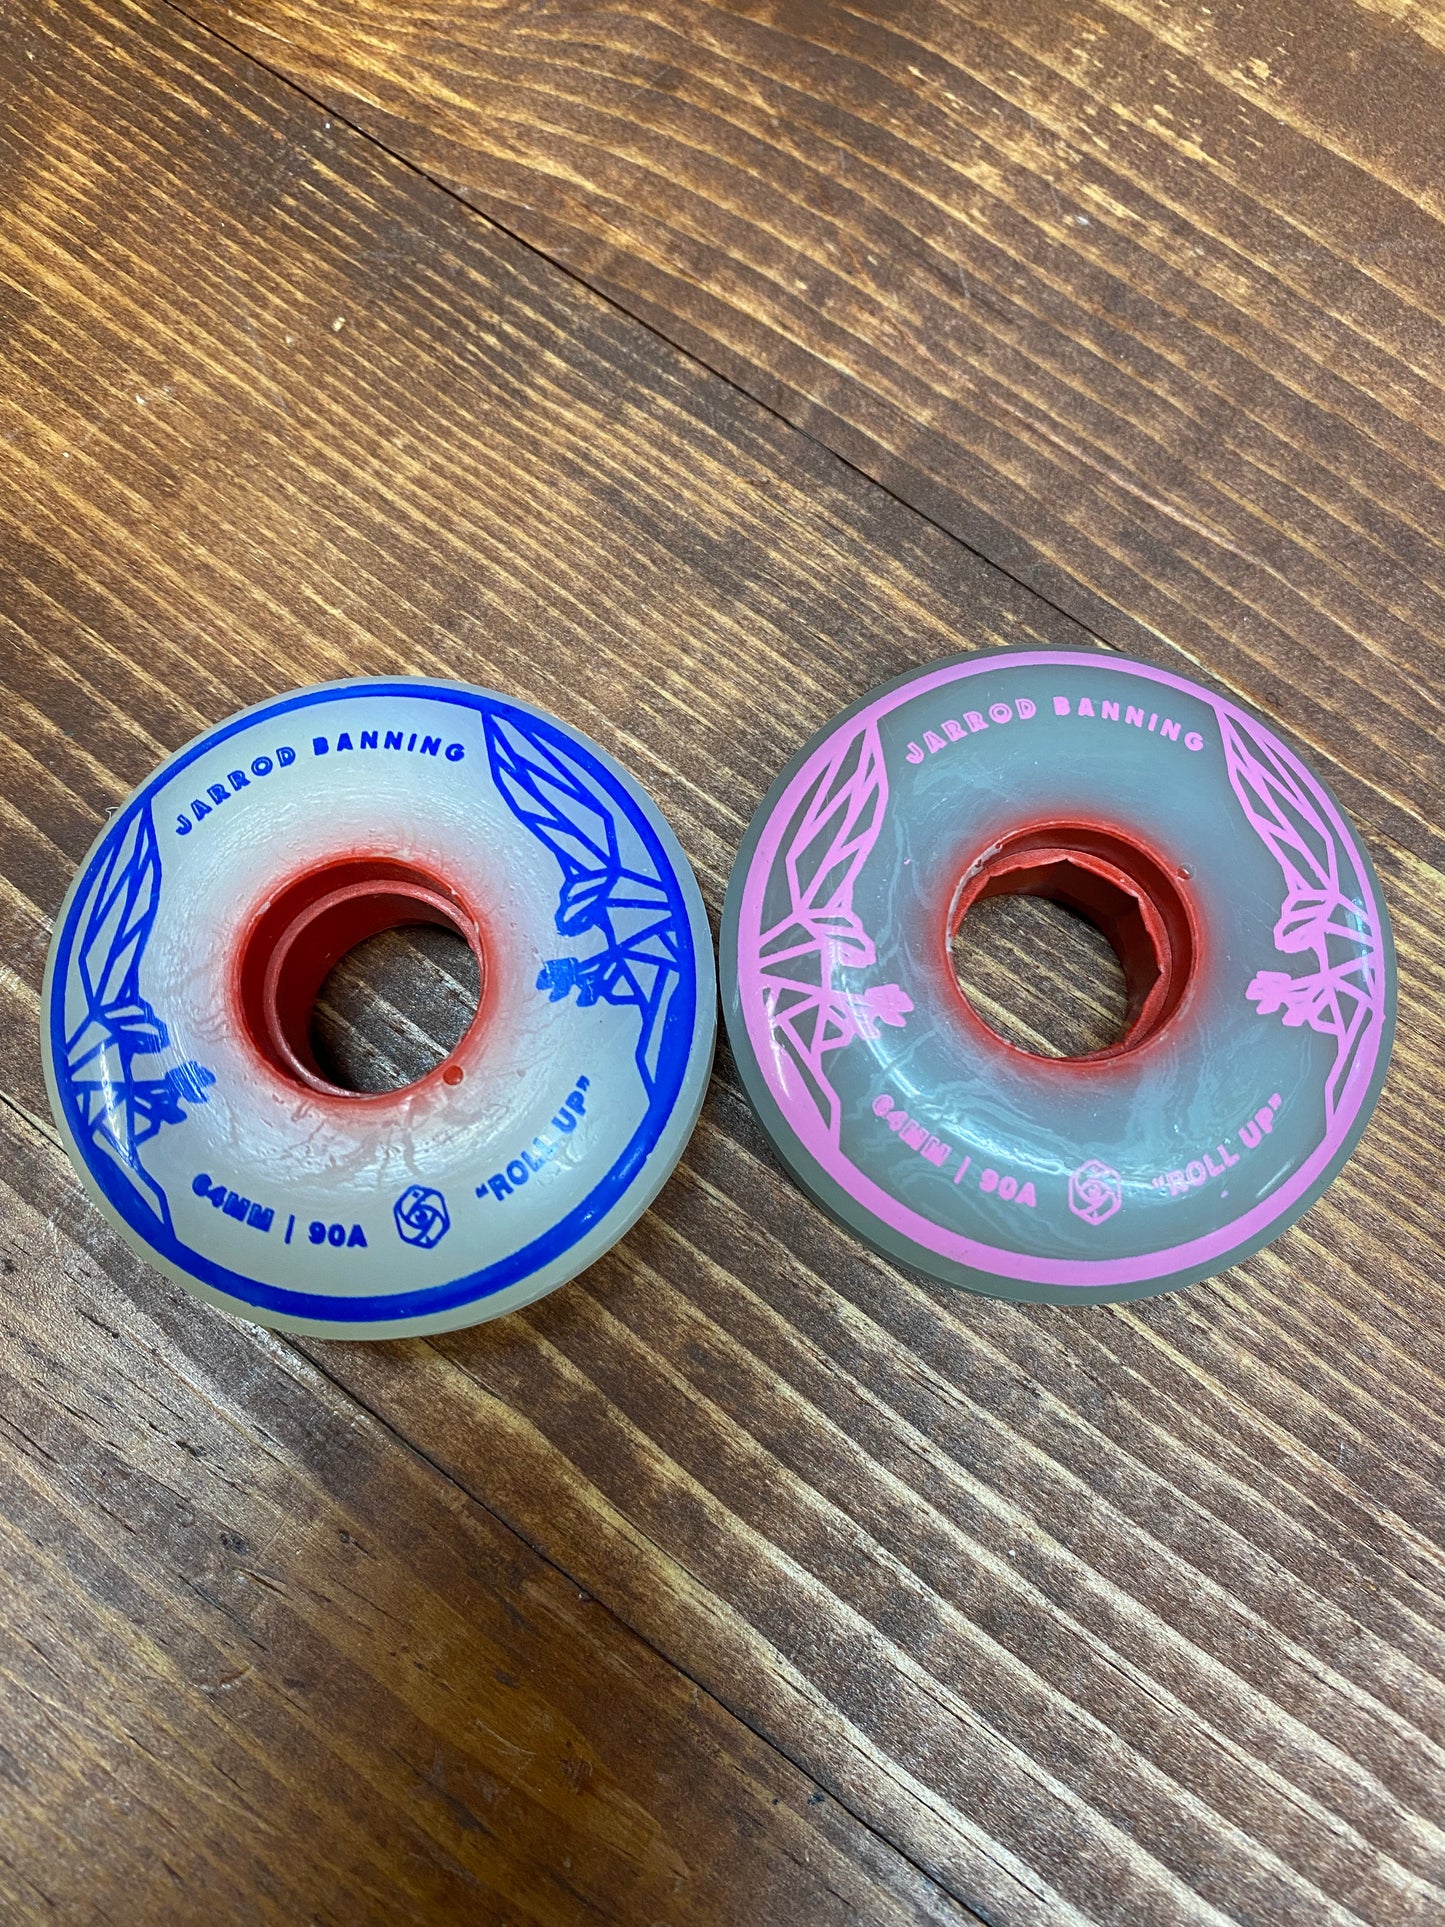 Red Eye Jarod Banning 64mm 90a inline skate wheels